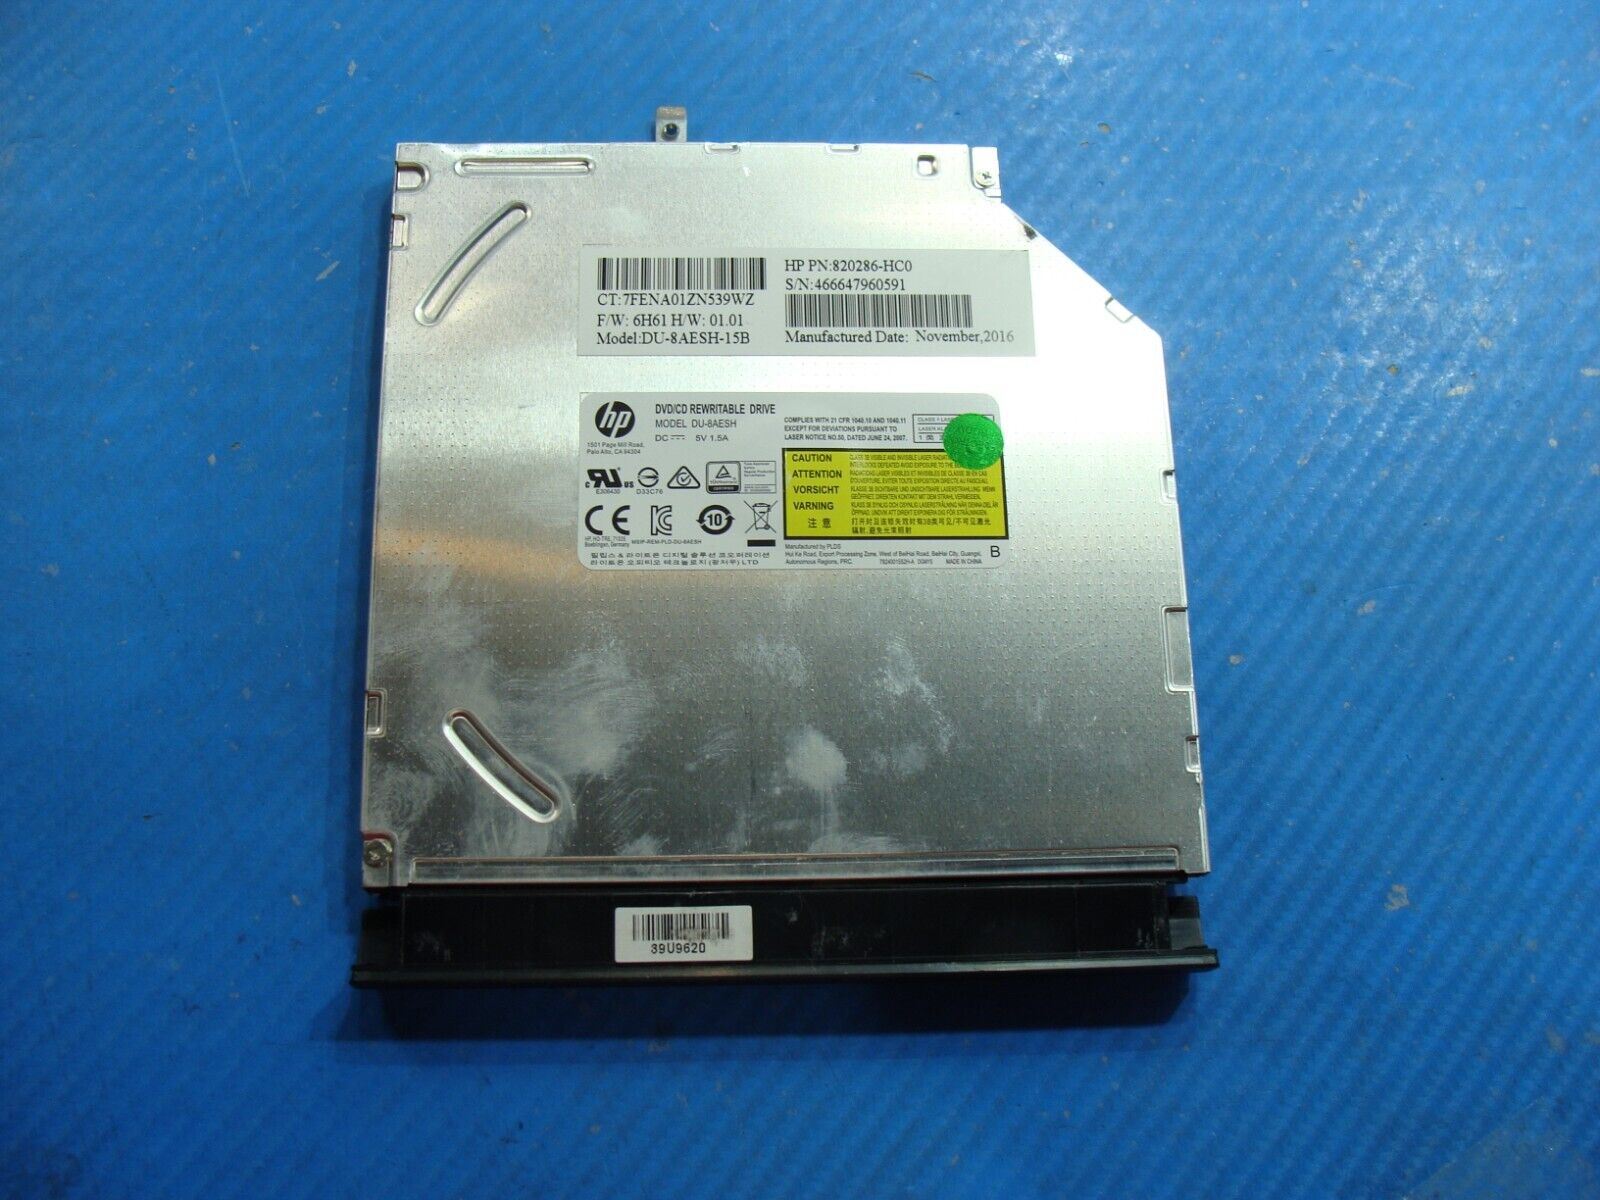 HP 15-f272wm 15.6 DVD/CD-RW Burner Drive DU-8AESH 820286-HC0